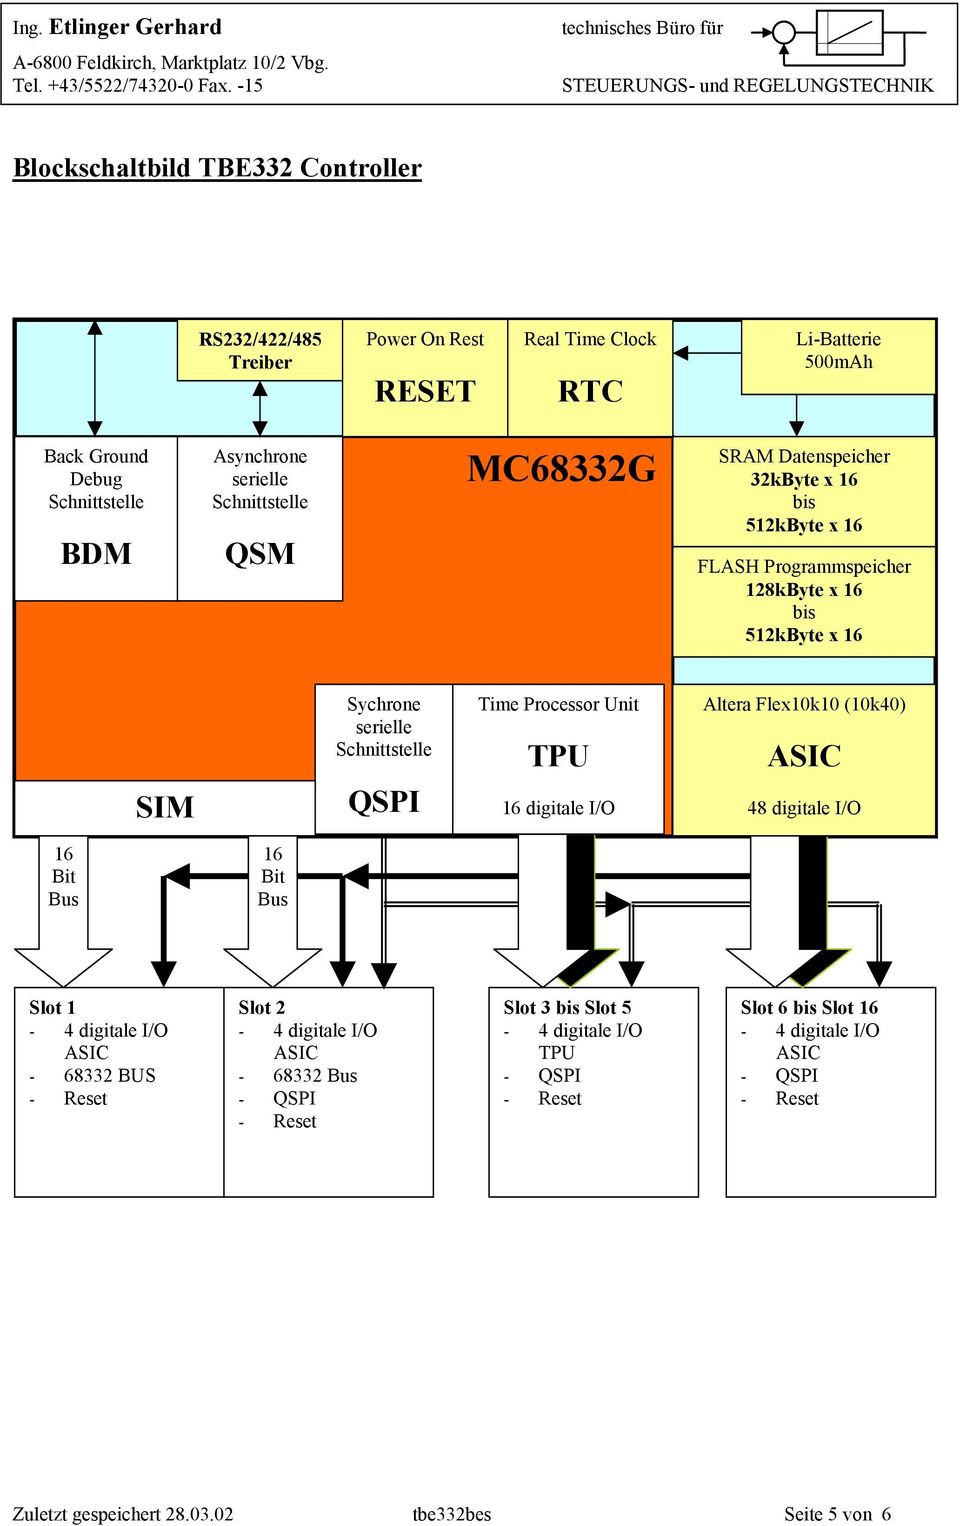 512kByte x 16 SIM Sychrone serielle Schnittstelle QSPI Time Processor Unit TPU 16 digitale I/O Altera Flex10k10 (10k40) 48 digitale I/O 16 Bit Bus